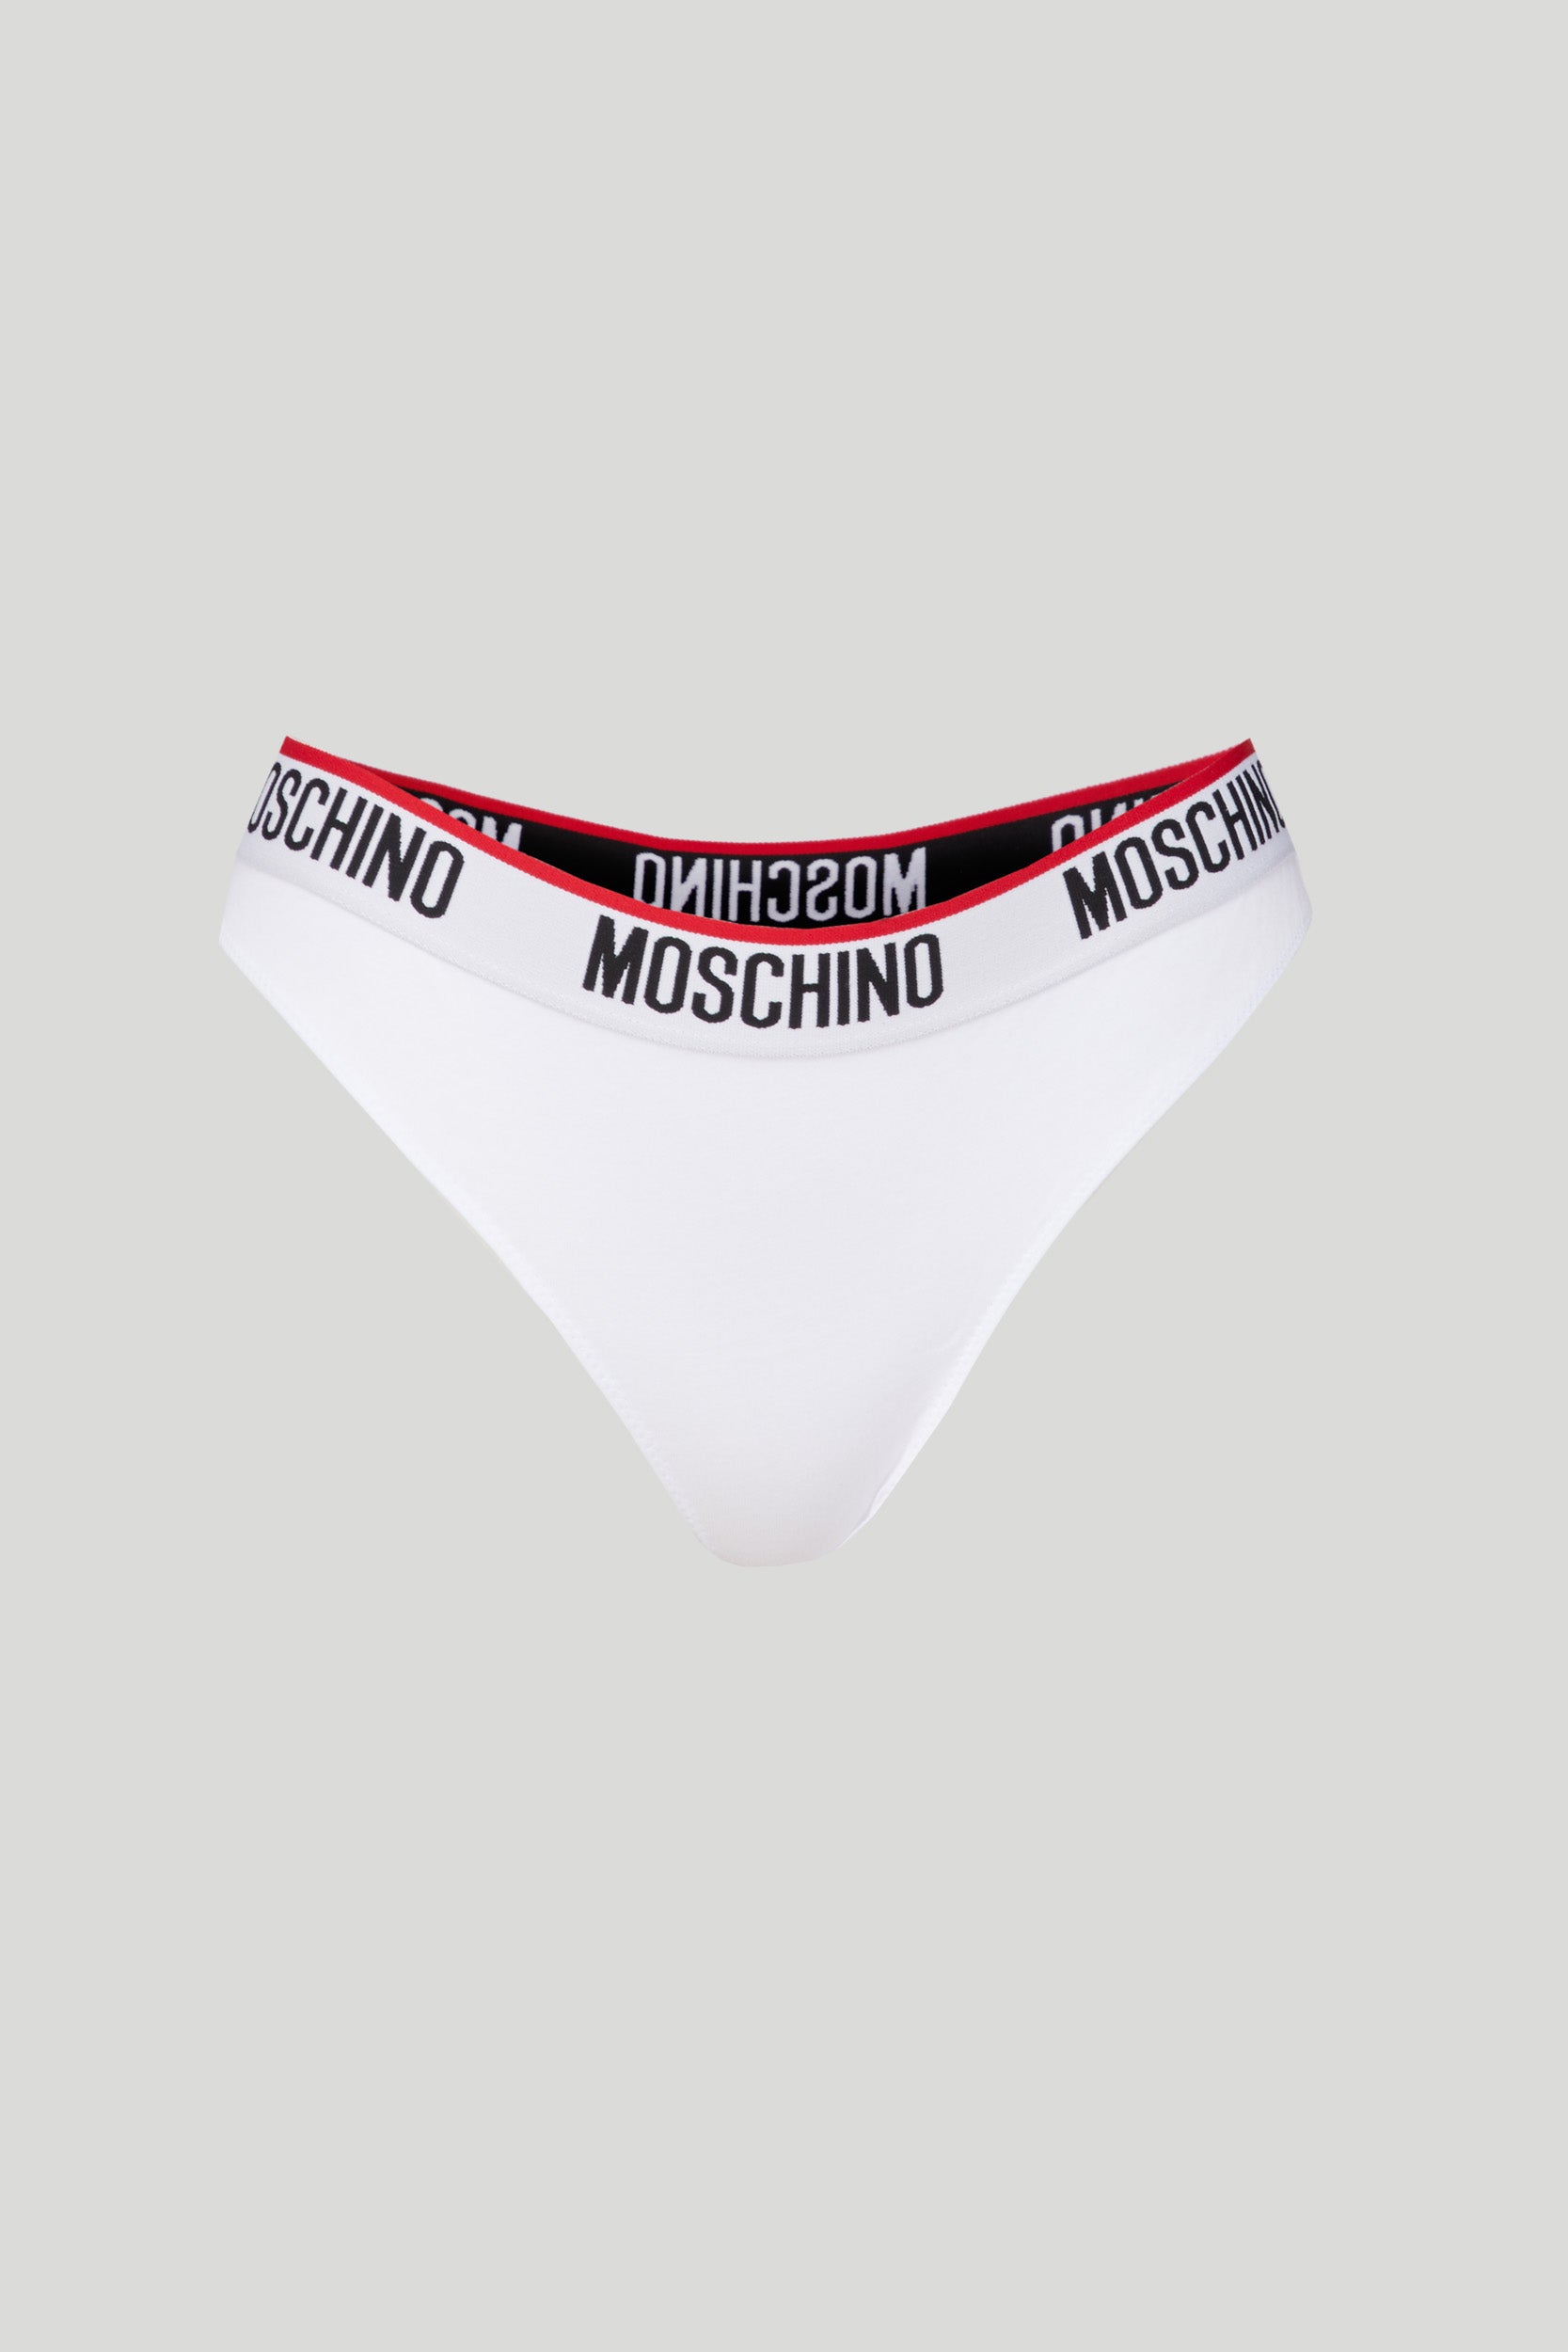 MOSCHINO White Briefs with Contrast Moschino Logo